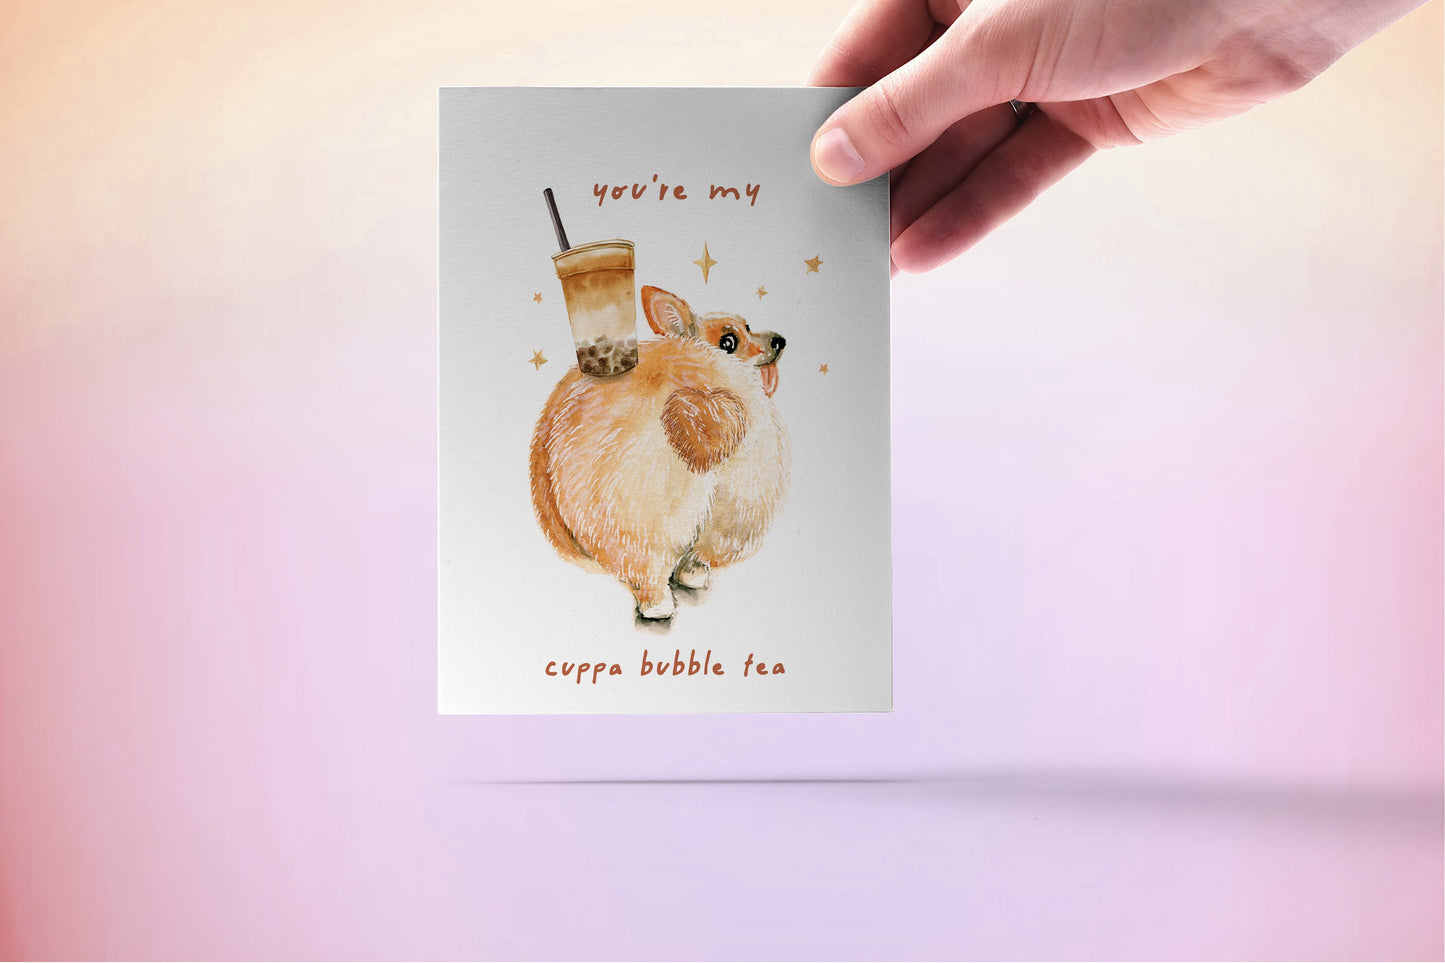 Corgi Boba Tea Valentines Day Card For Boyfriend - Cute Boba Card For Her - I Love You Card For Girlfriend